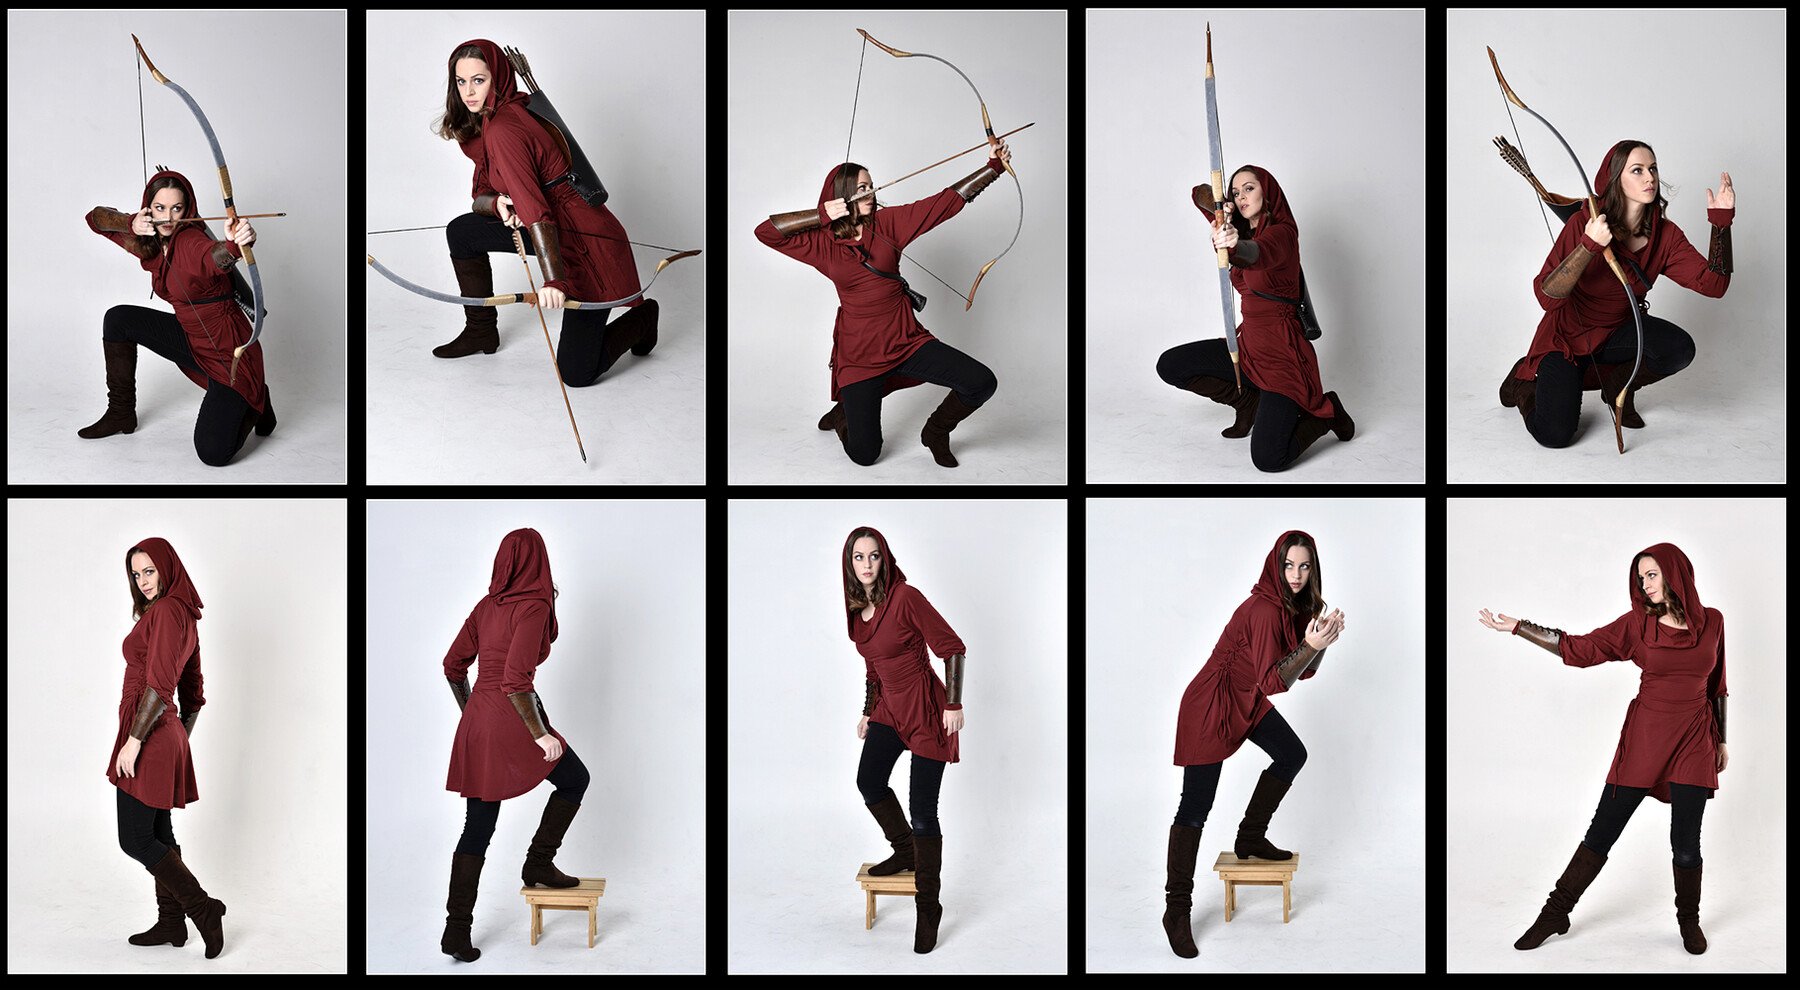 42 Archeress Images, Stock Photos, 3D objects, & Vectors | Shutterstock